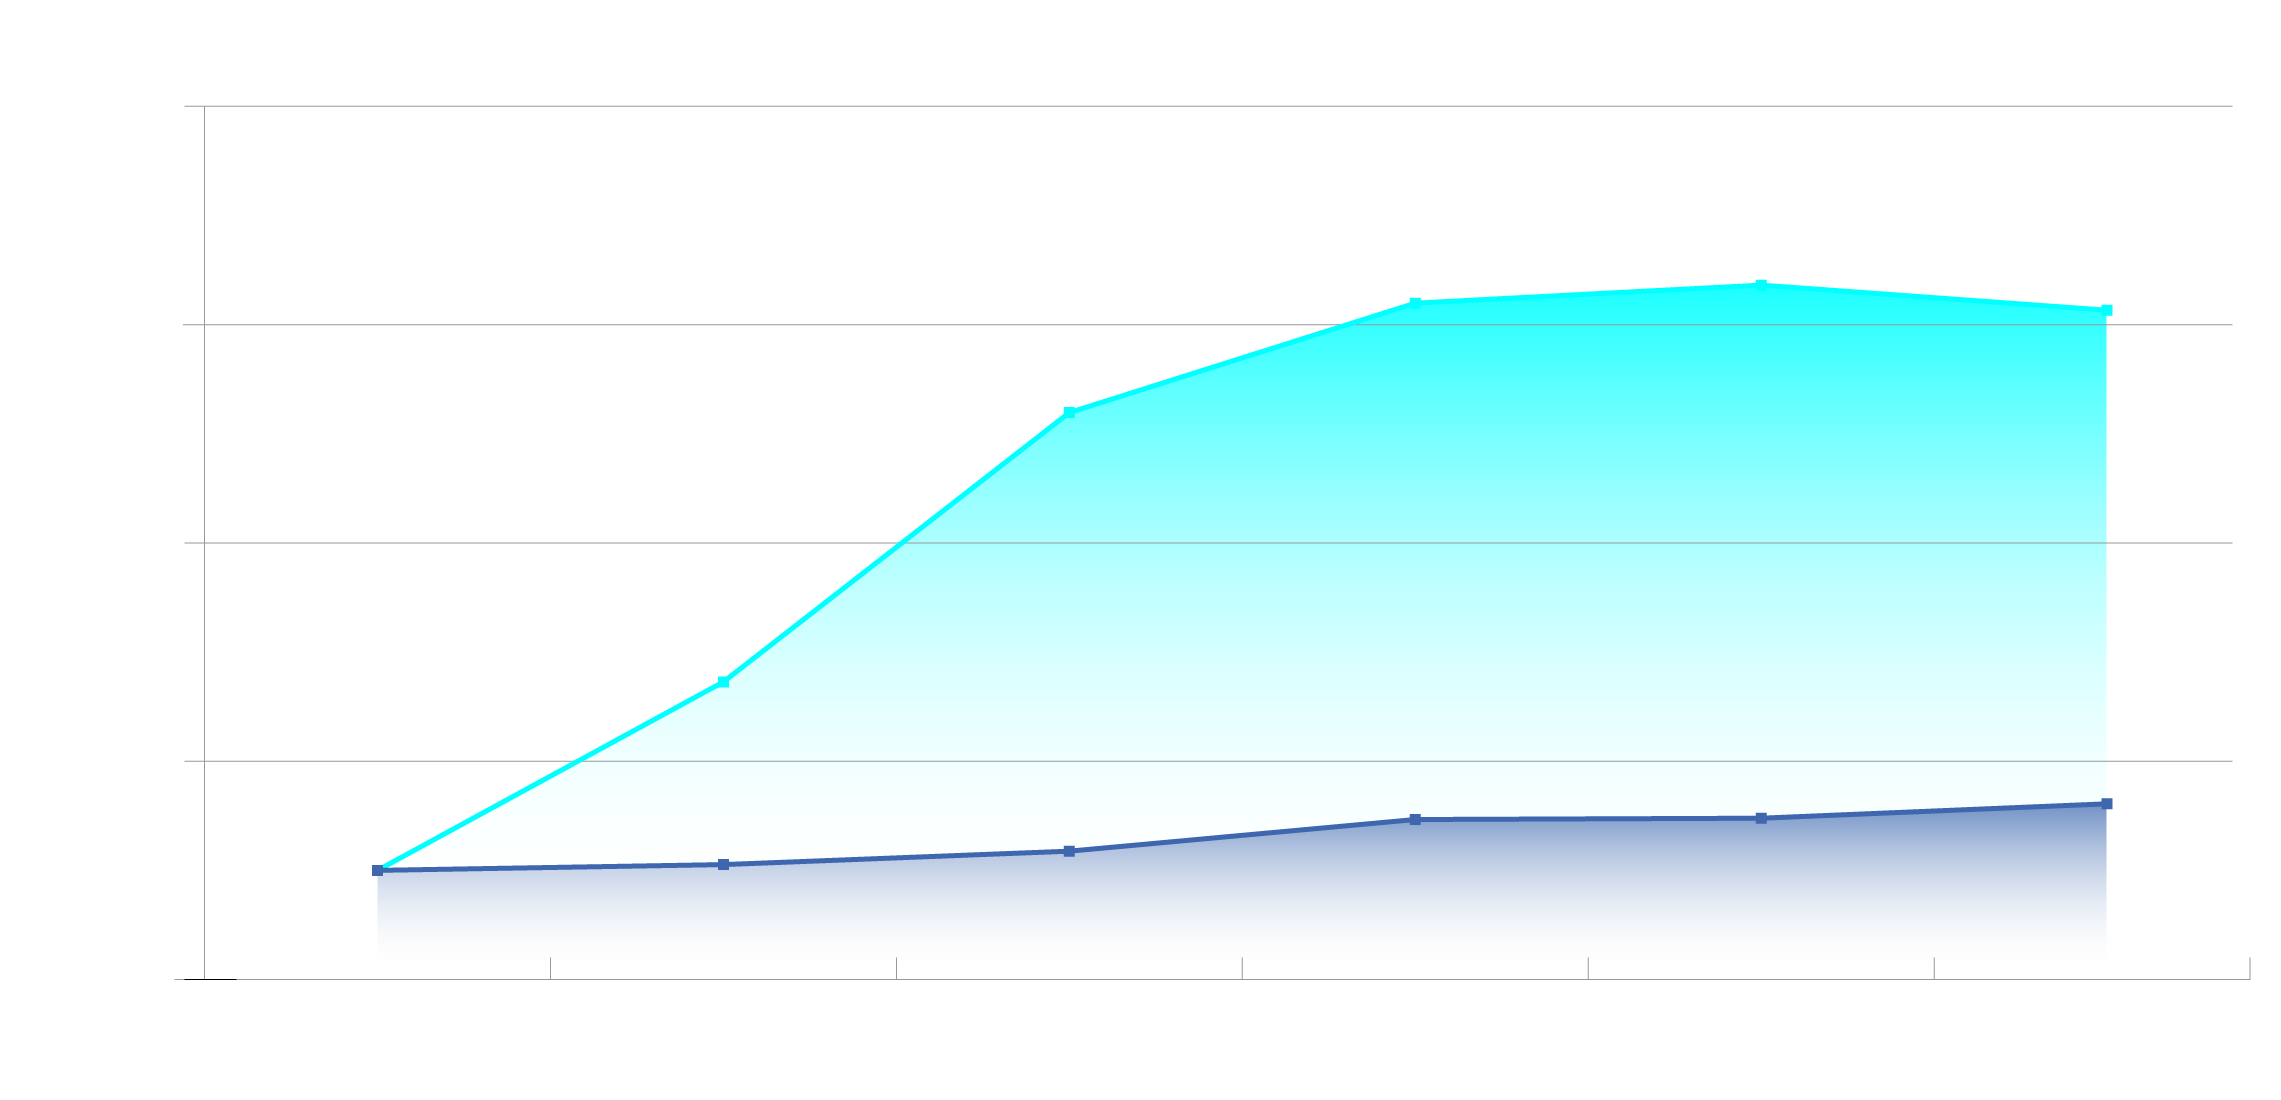 6 month chart